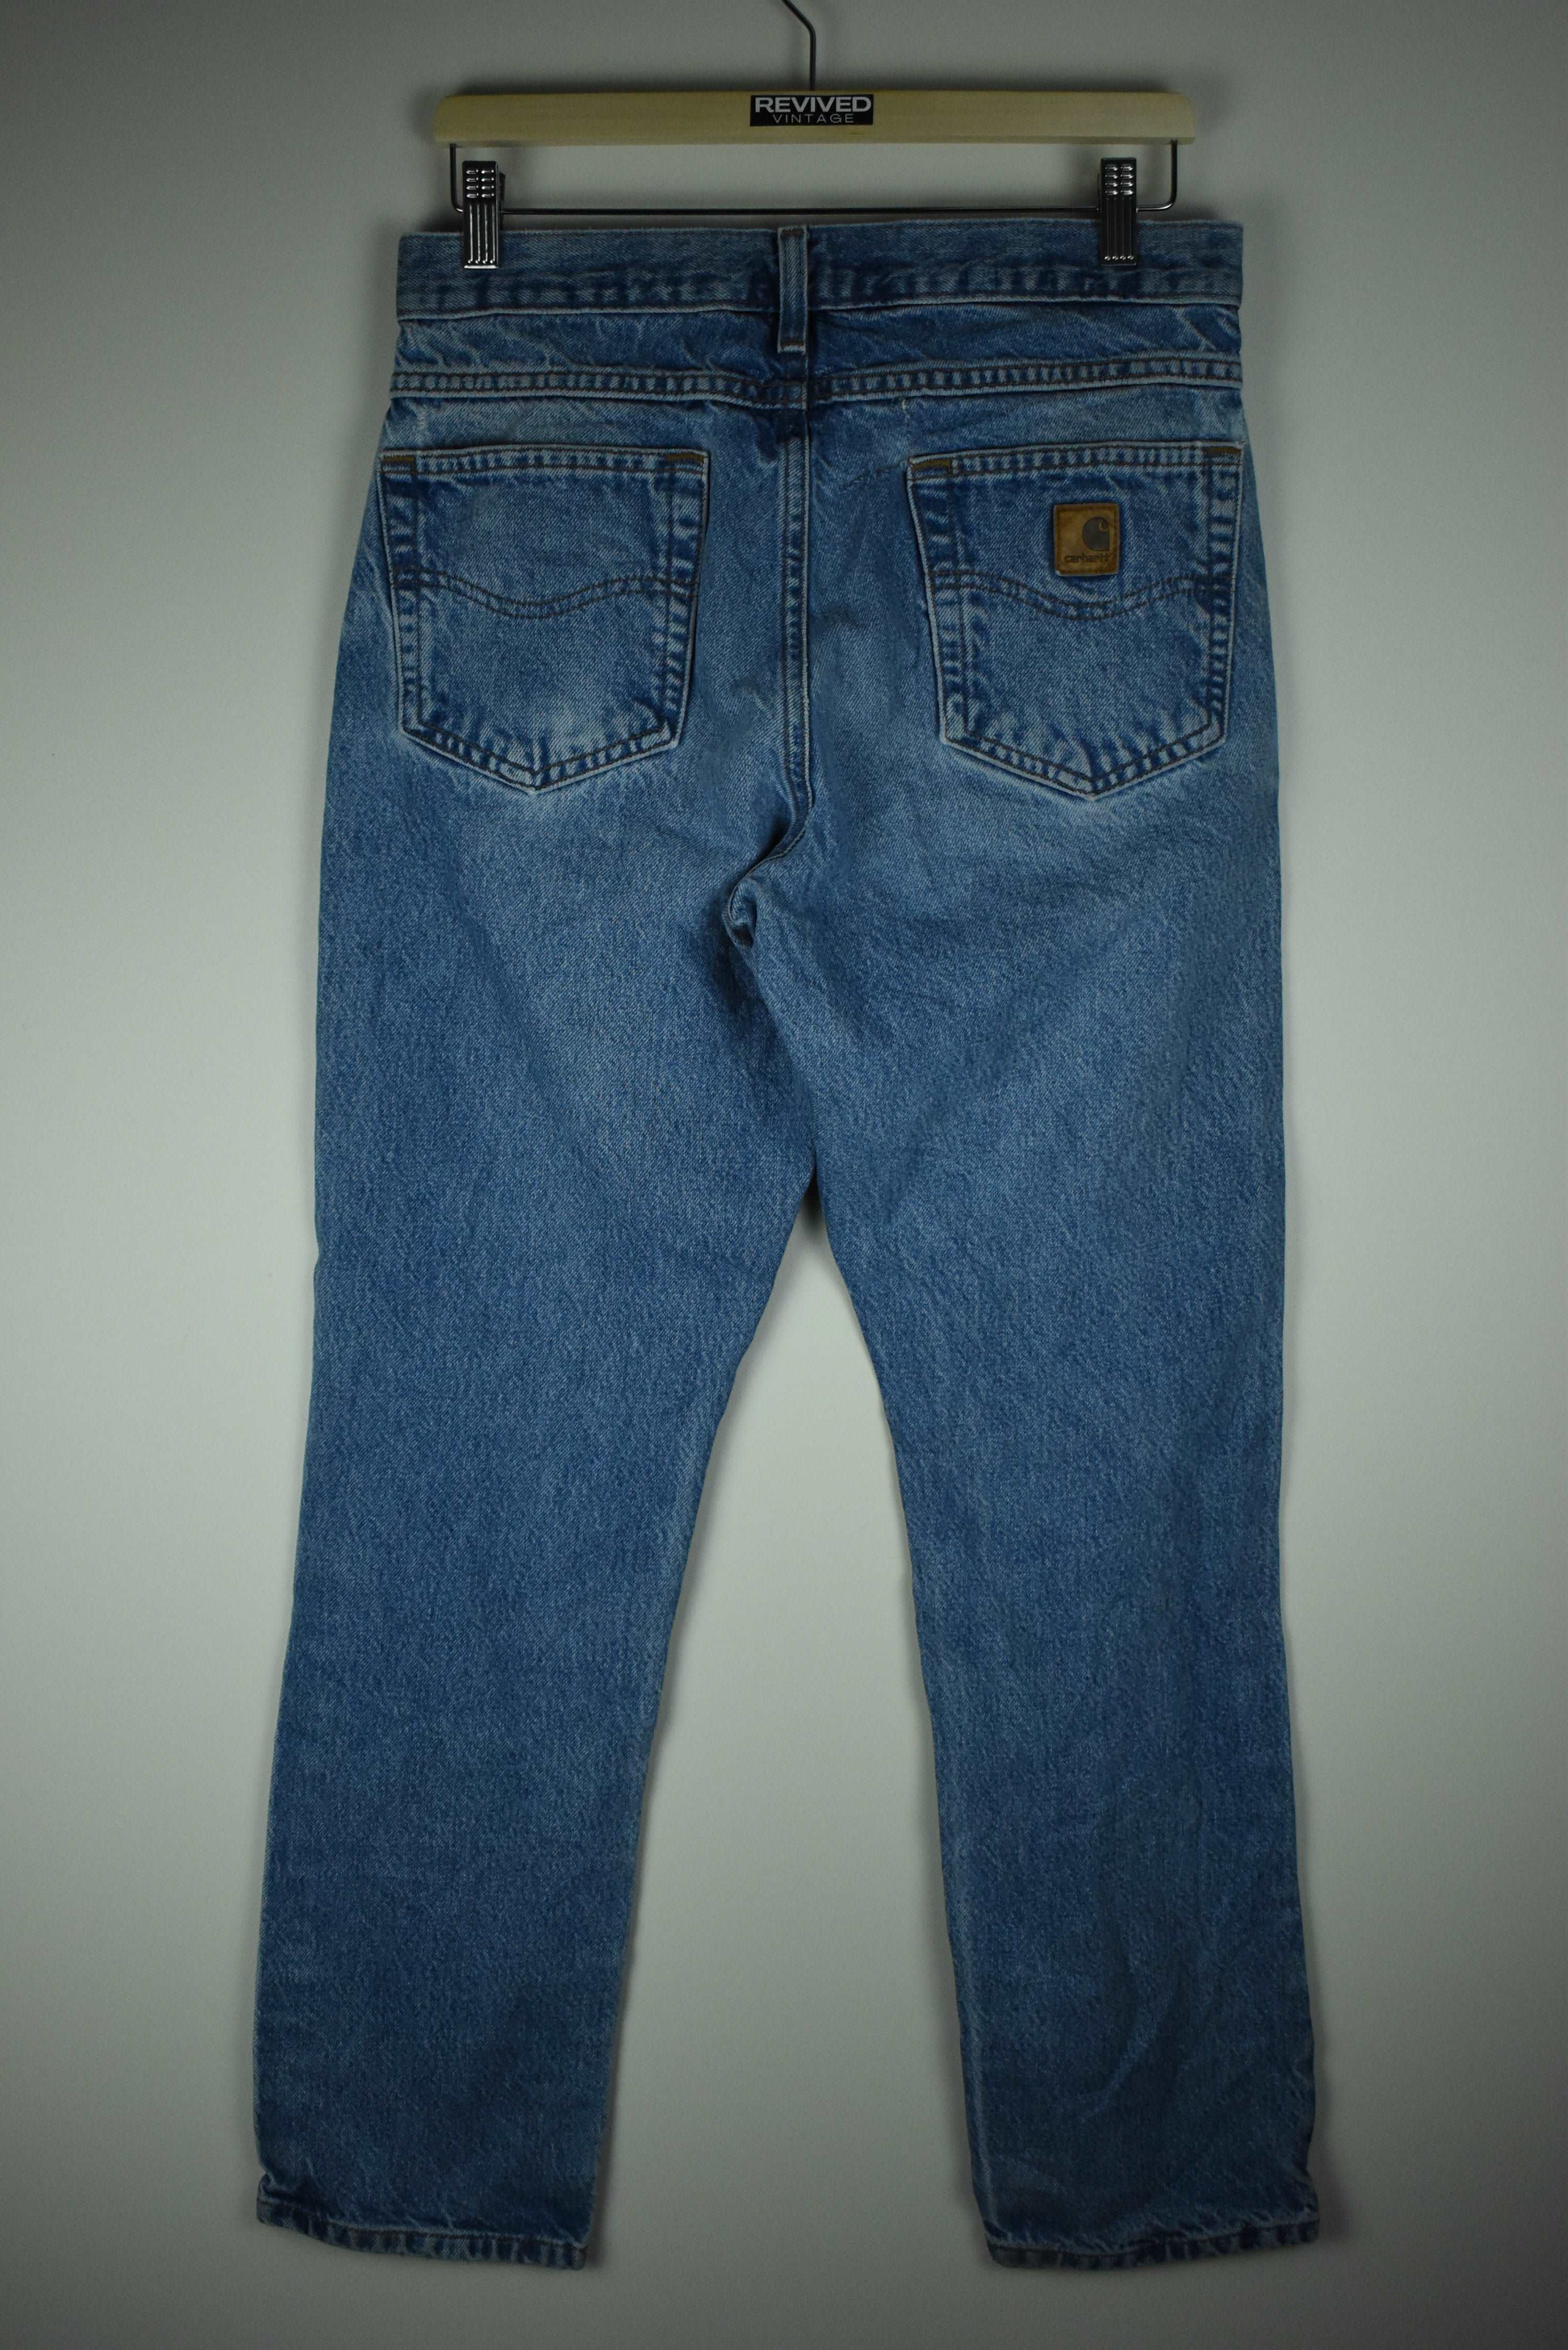 Vintage Carhartt Jeans 30 x 30